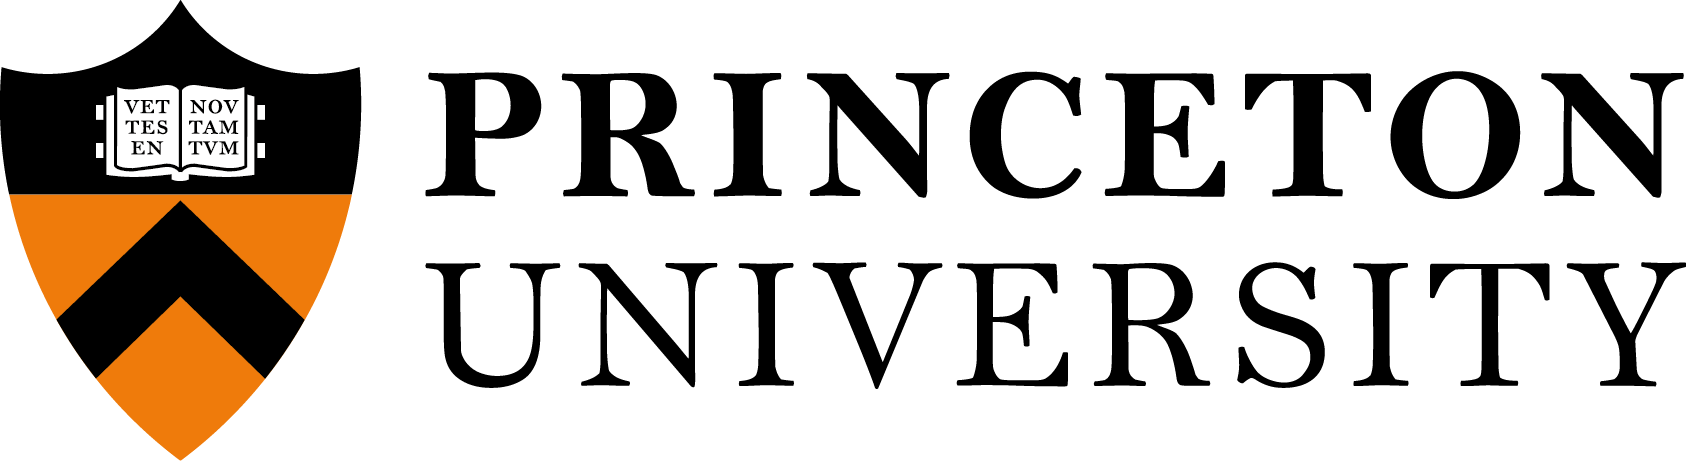 princeton-university-logo_freelogovectors.net_